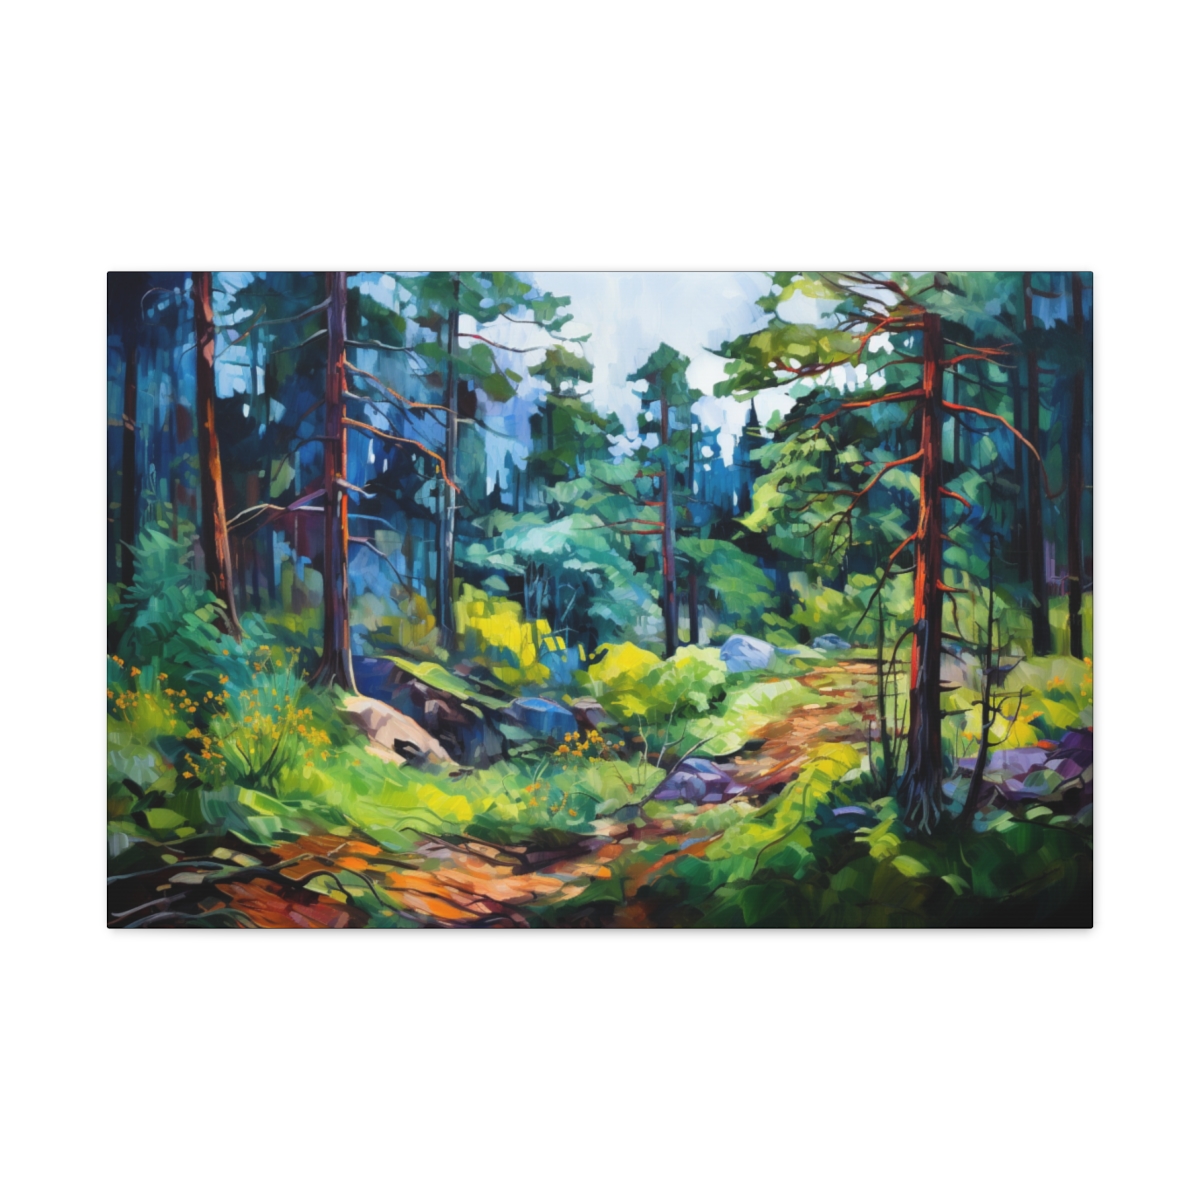 Forest Wall Art Canvas Print: The Blending